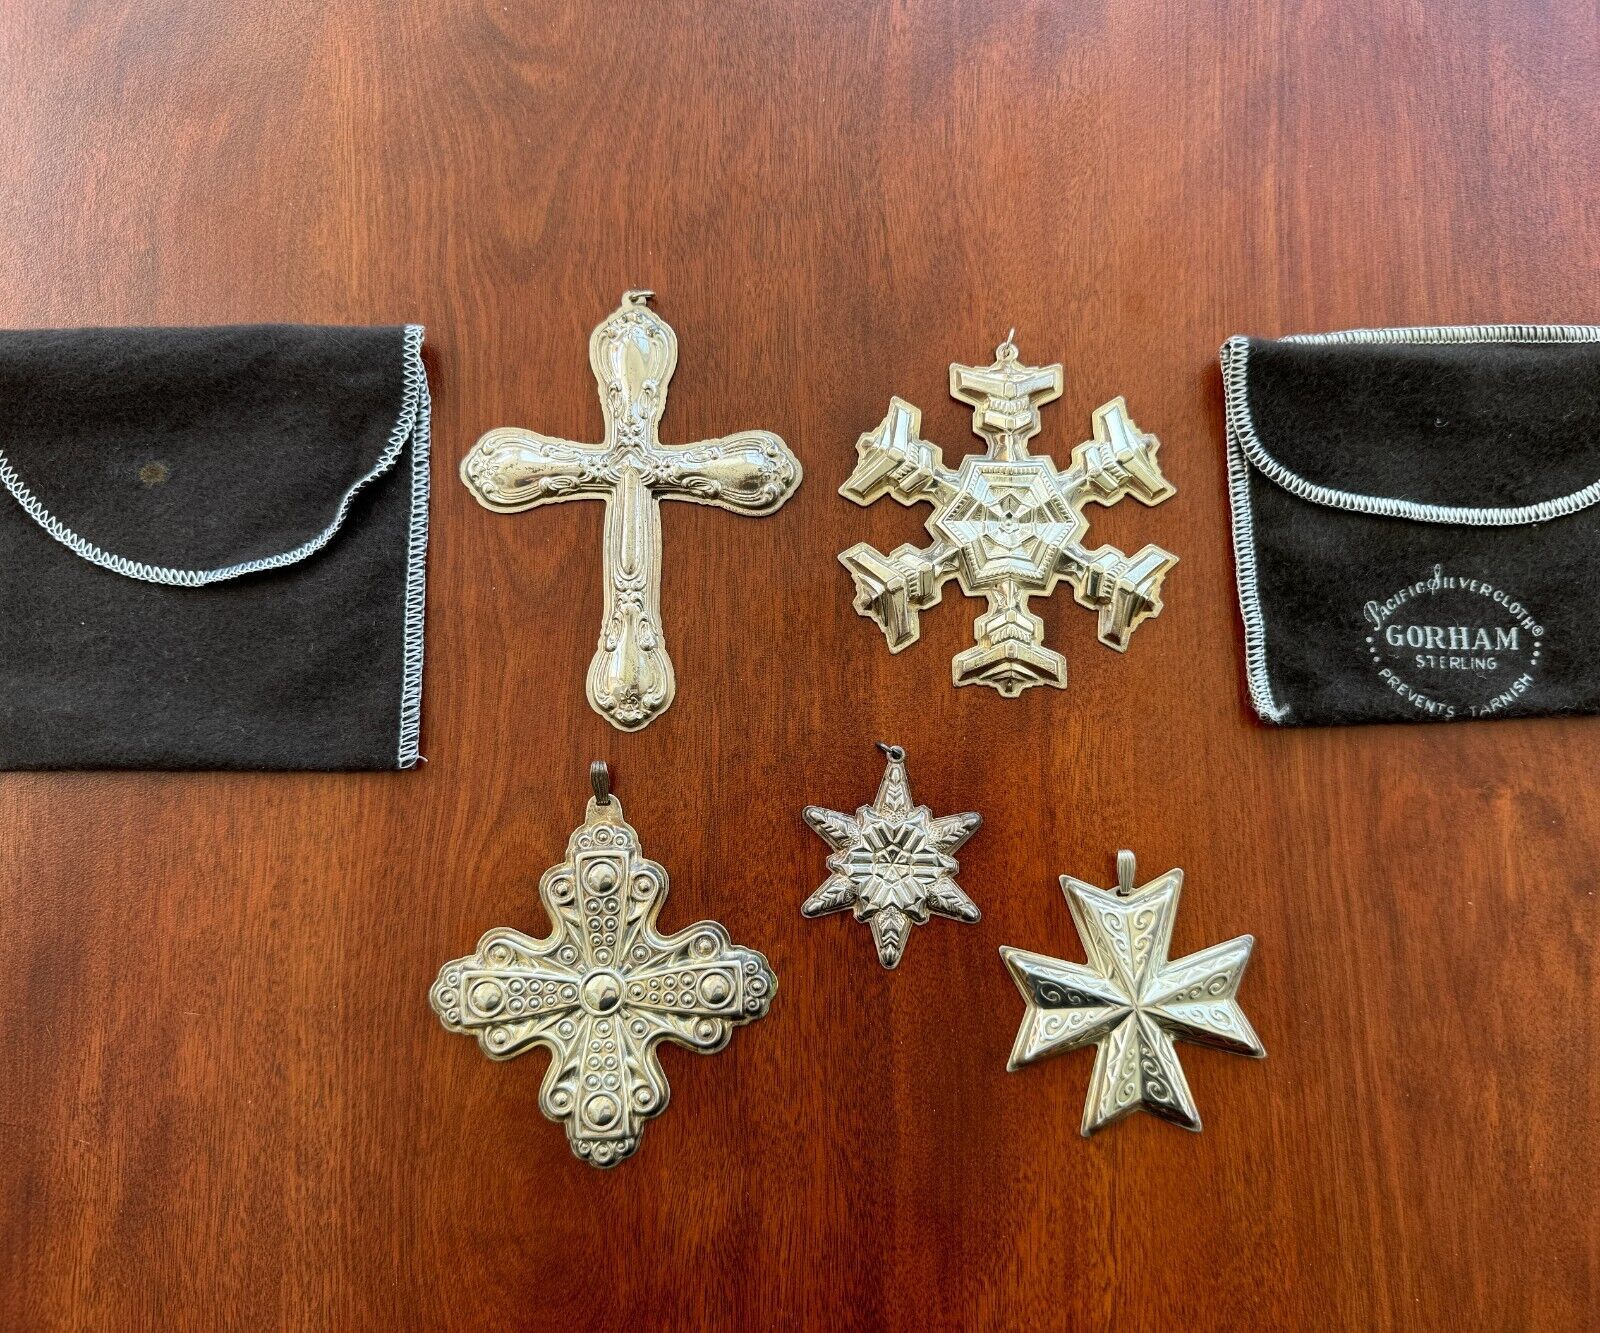 5 Gorham Reed Barton Sterling Silver Christmas Cross Ornaments Pendants 1970-98 - $336.60